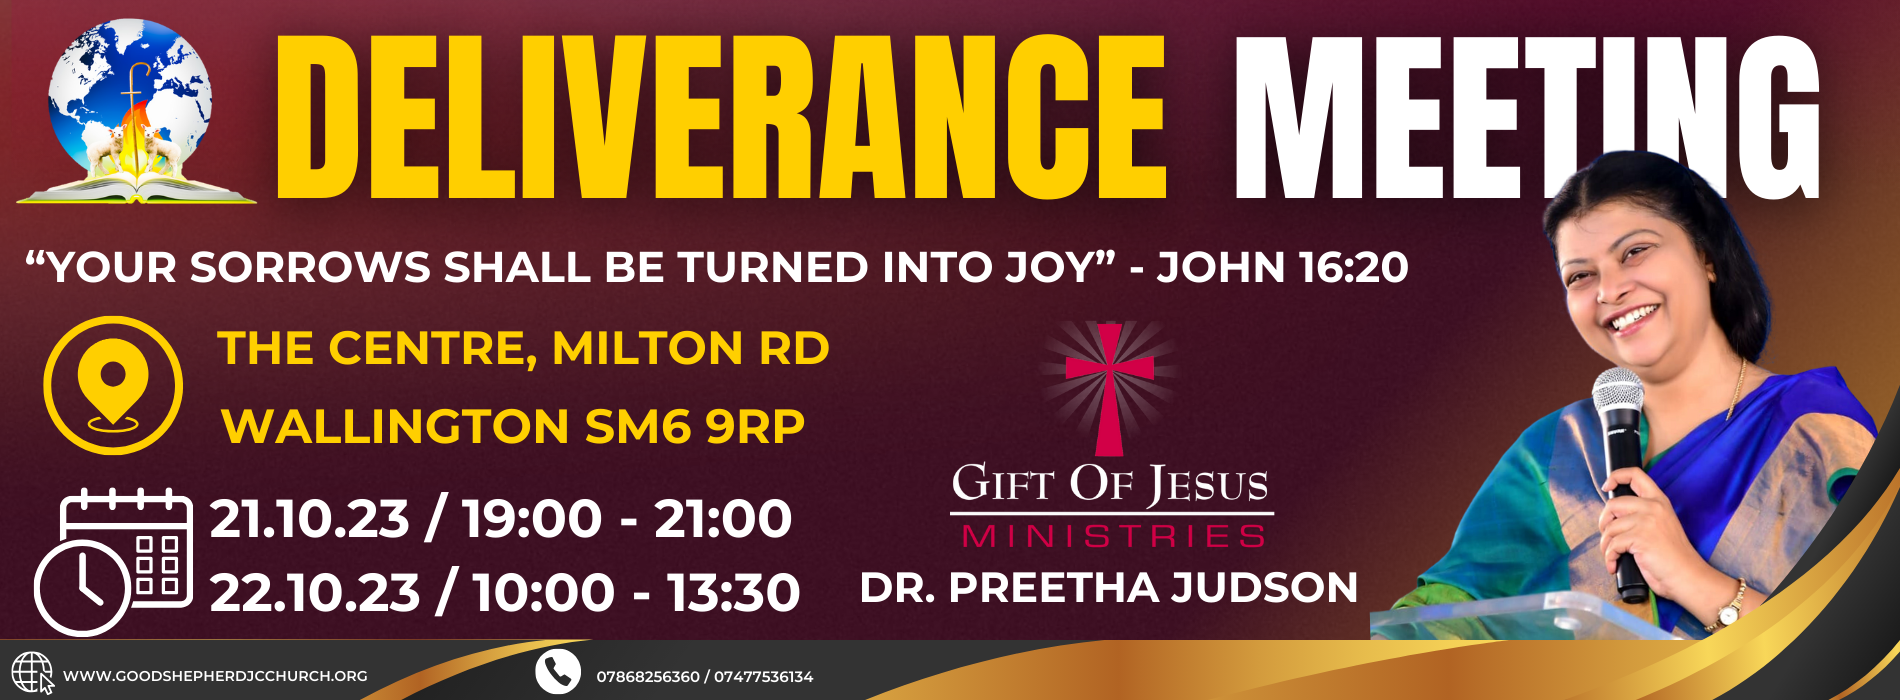 Deliverance Meeting